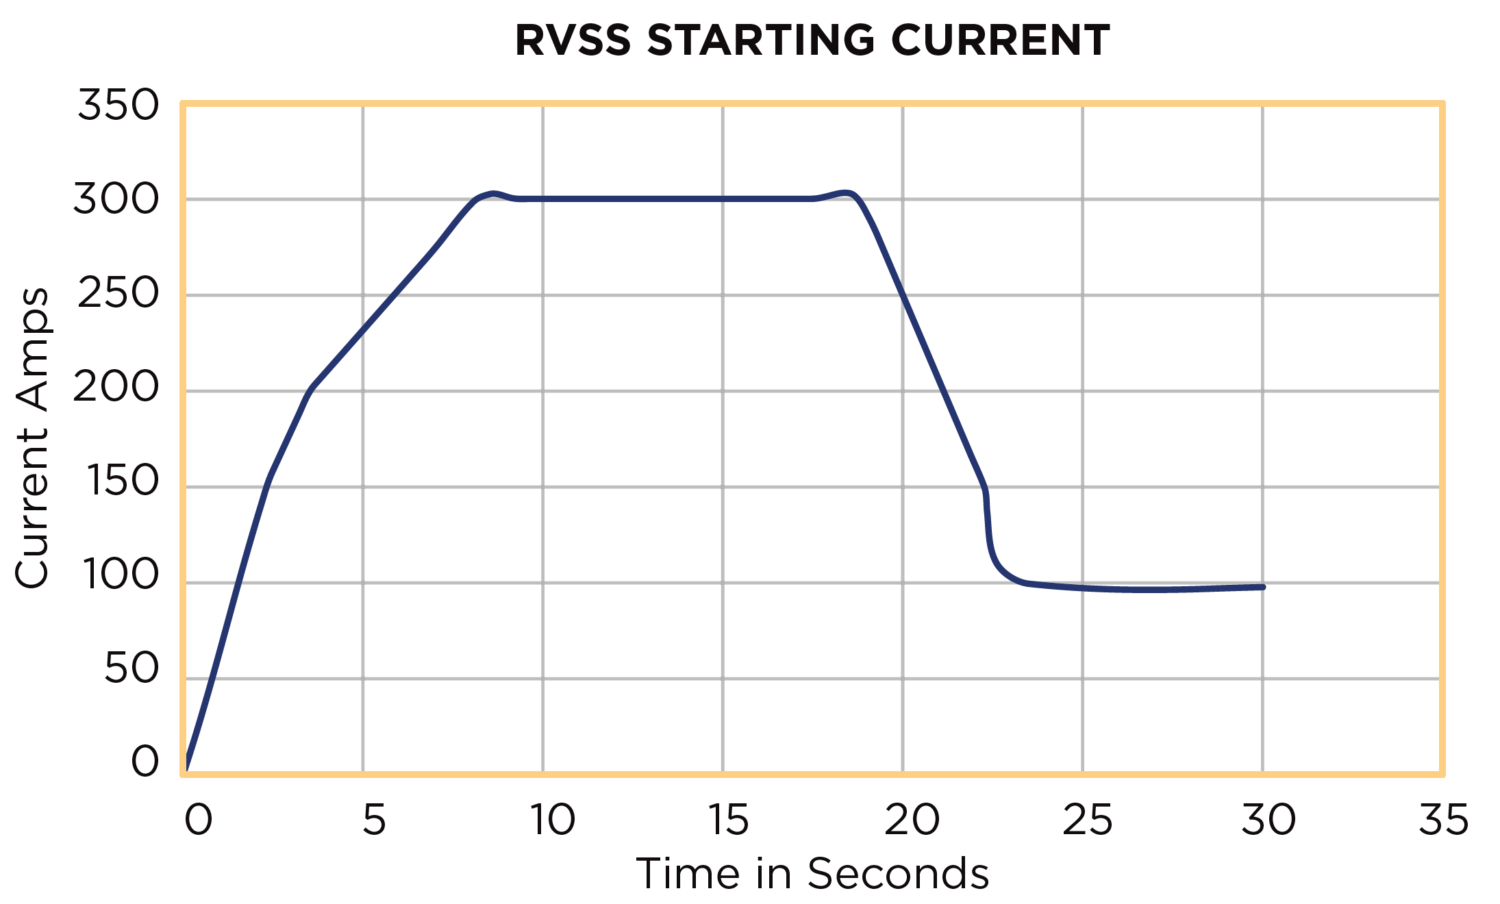 RVSS Starting Current